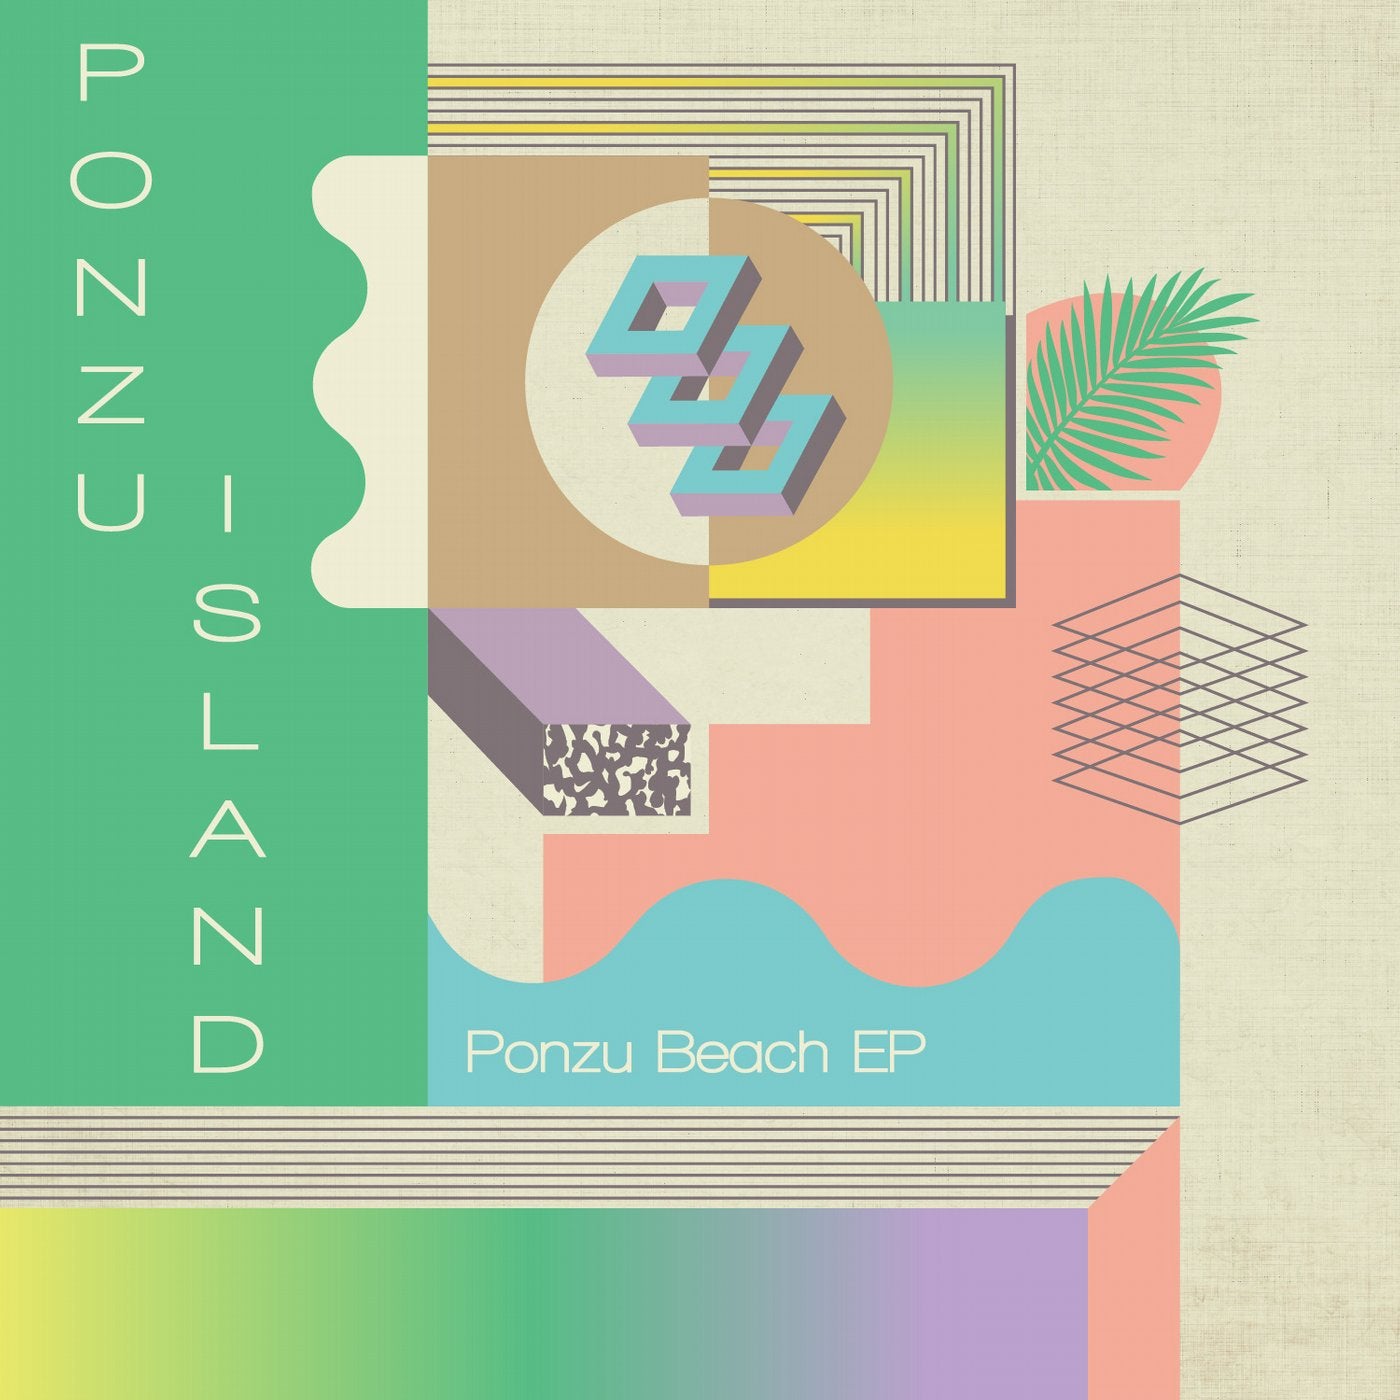 Ponzu Beach